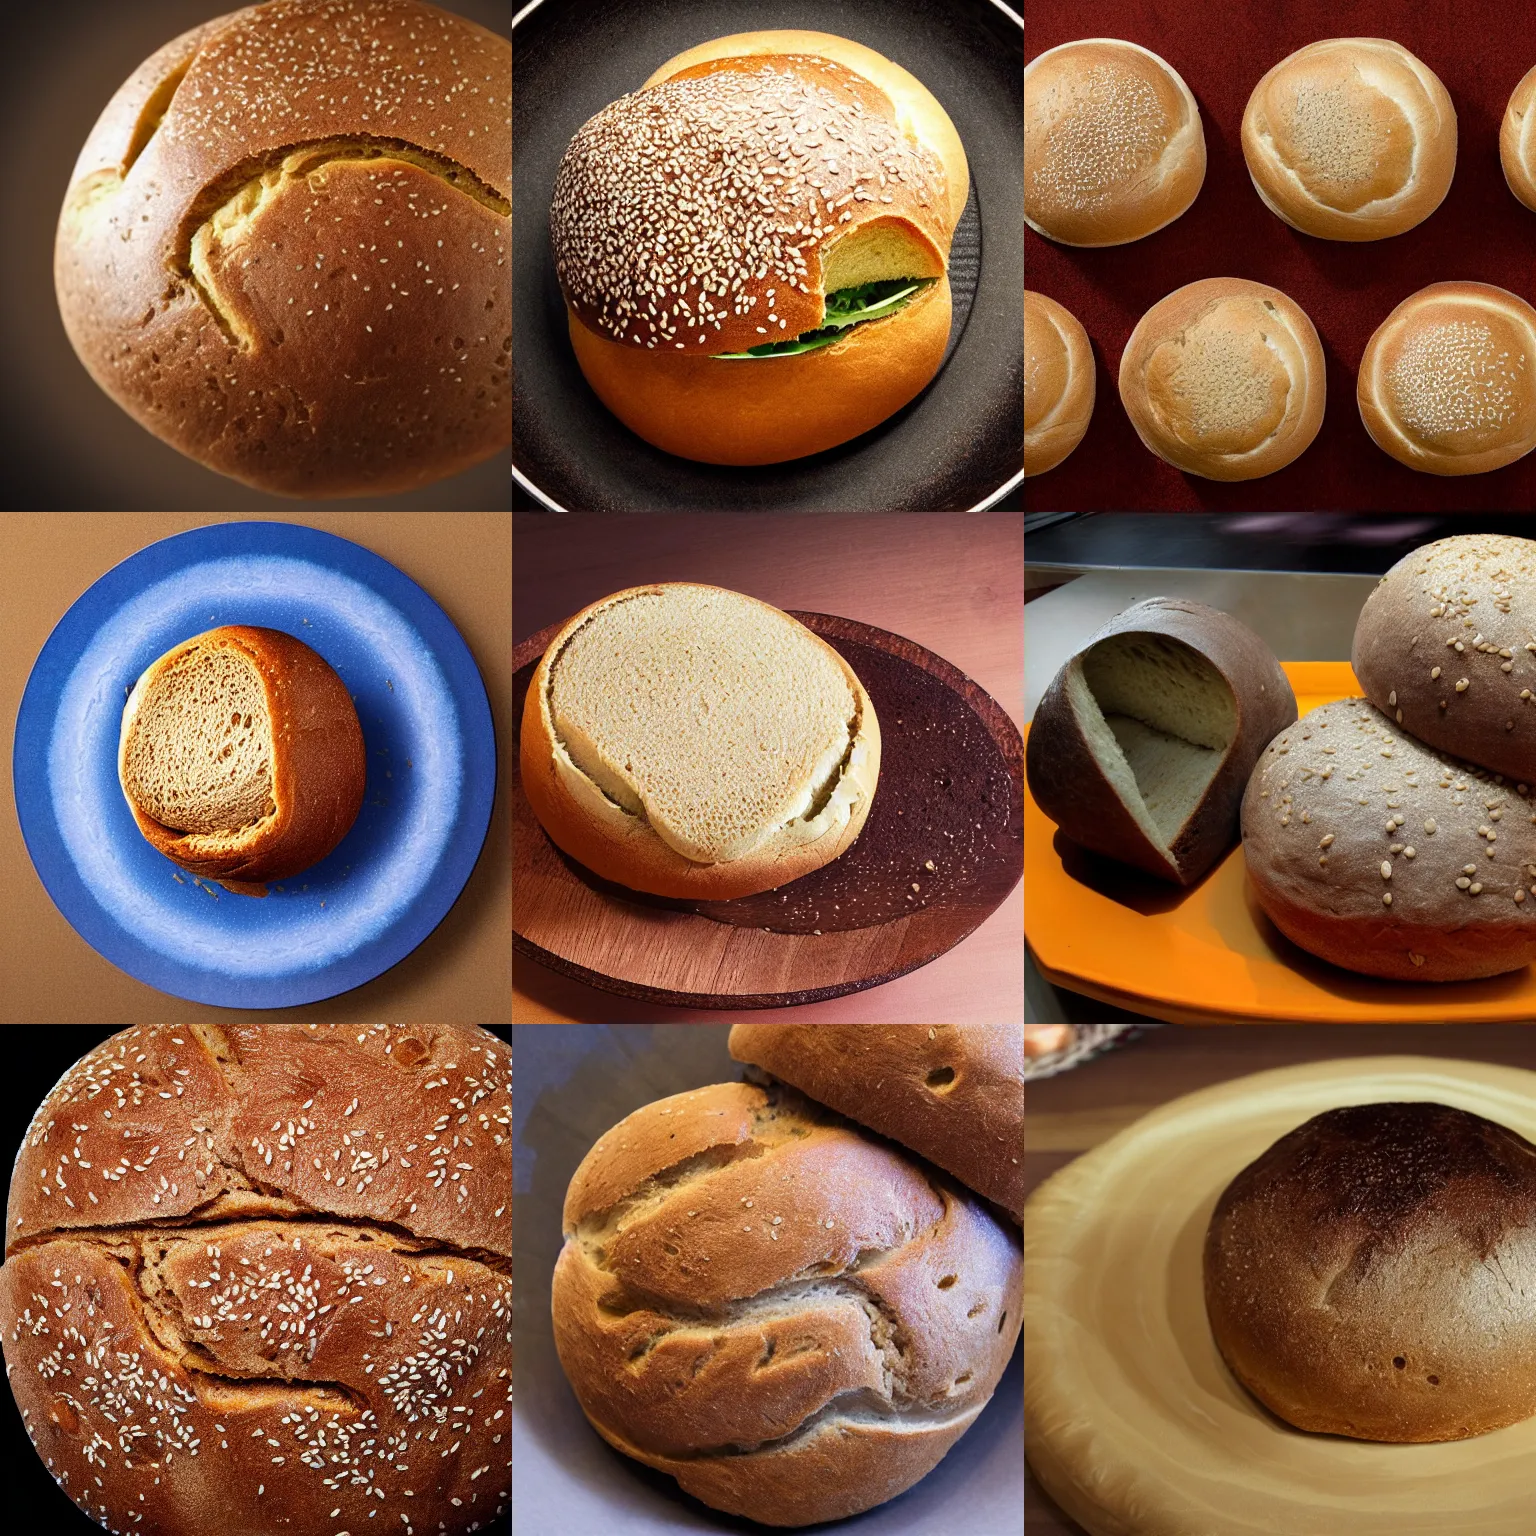 Prompt: 4 5 degrees photo planetoid'earth'in sesame bread bun